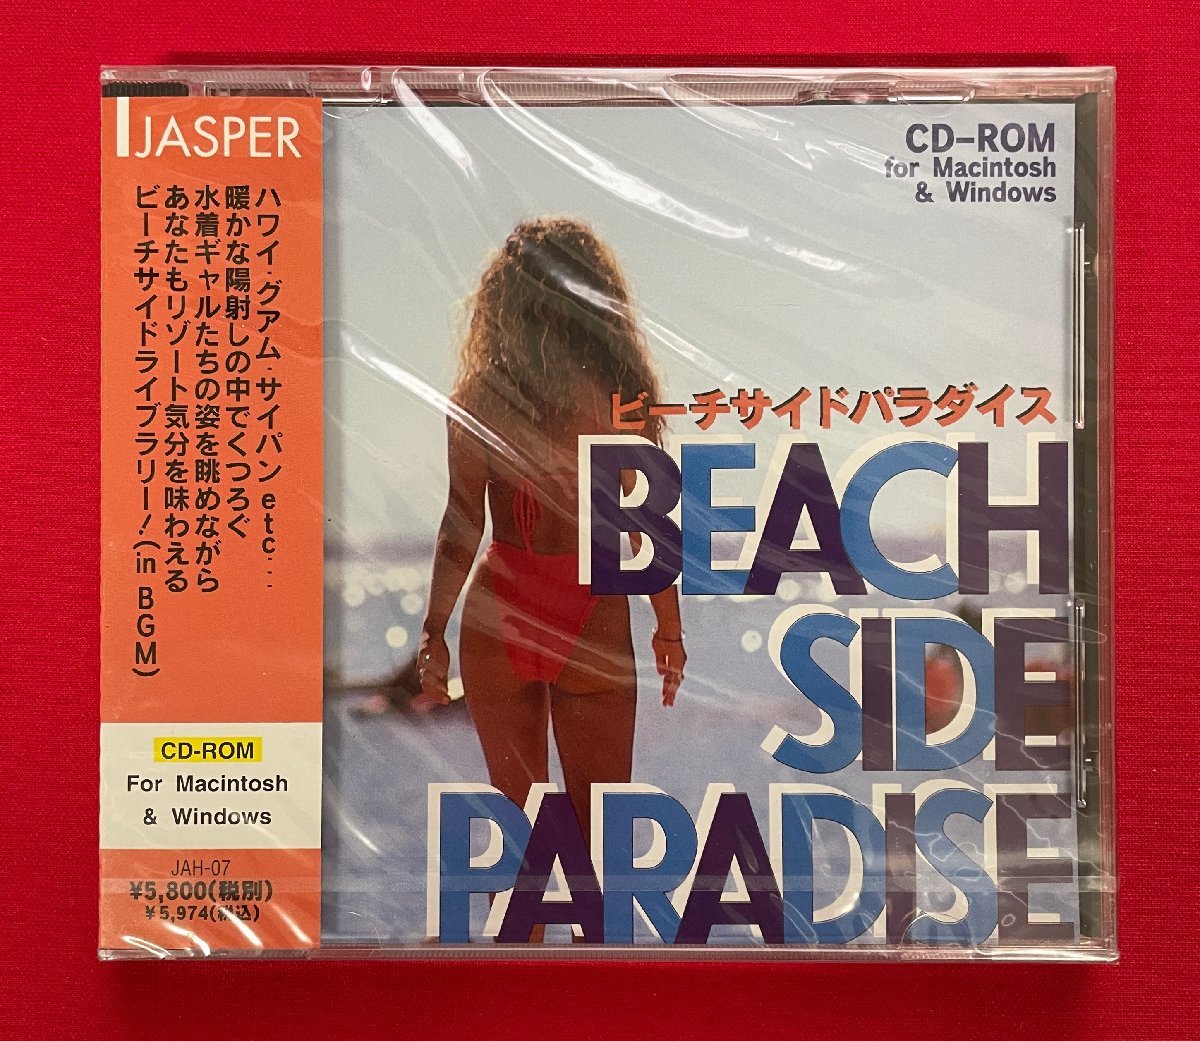 CD-ROM／Windows *  Macintosh JASPER BEACH SIDE PARADISE  пляж  бок   рай  JAH-07  в настоящее время  моно   редко встречающийся 　D1483